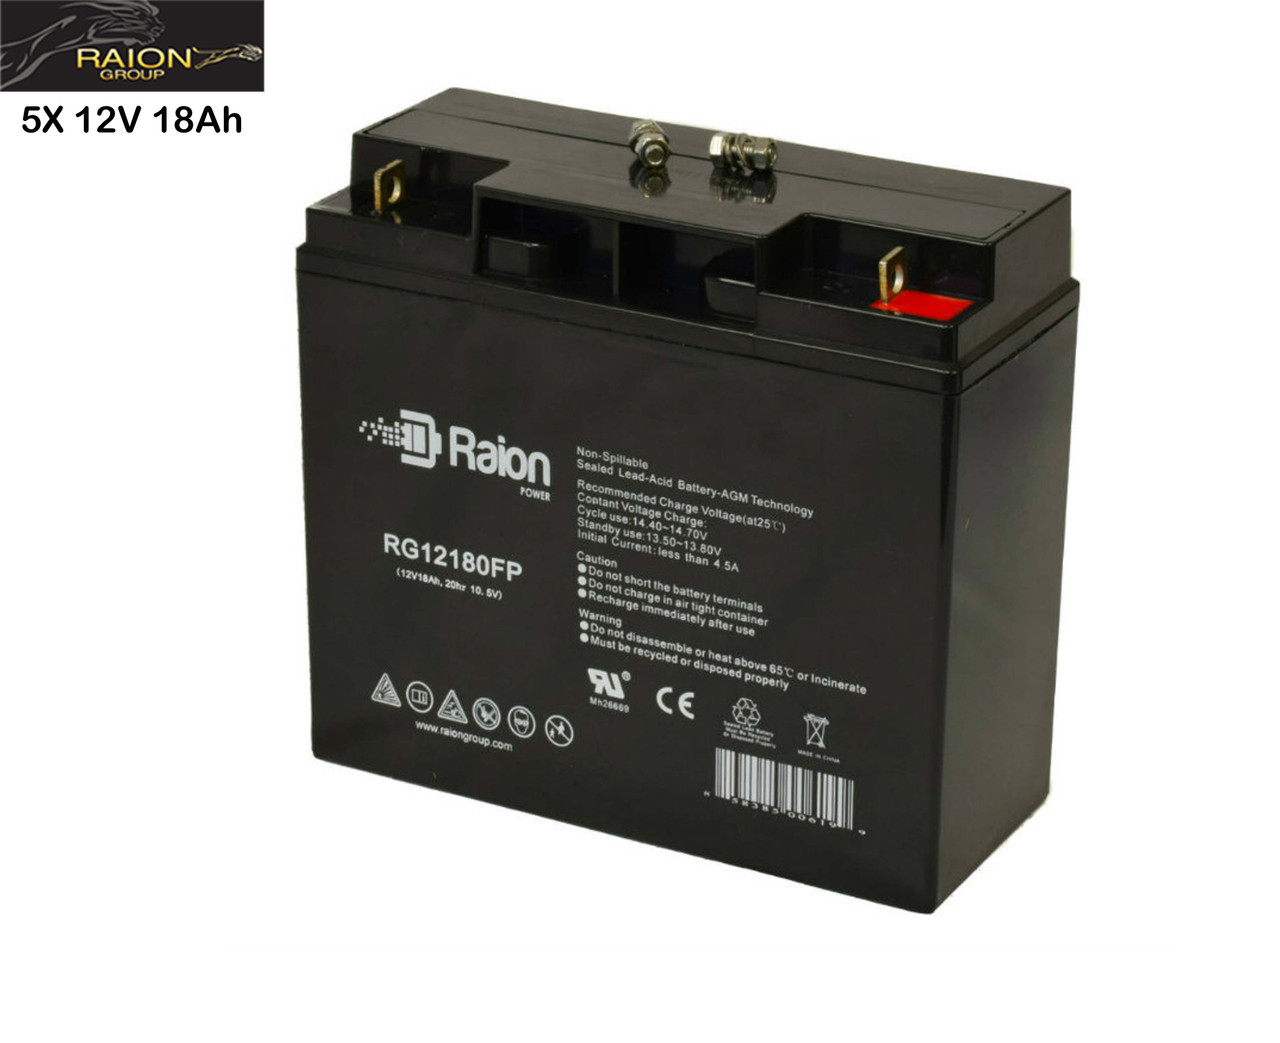 Raion Power Replacement 12V 18Ah Battery for Daymak Daytona - 5 Pack